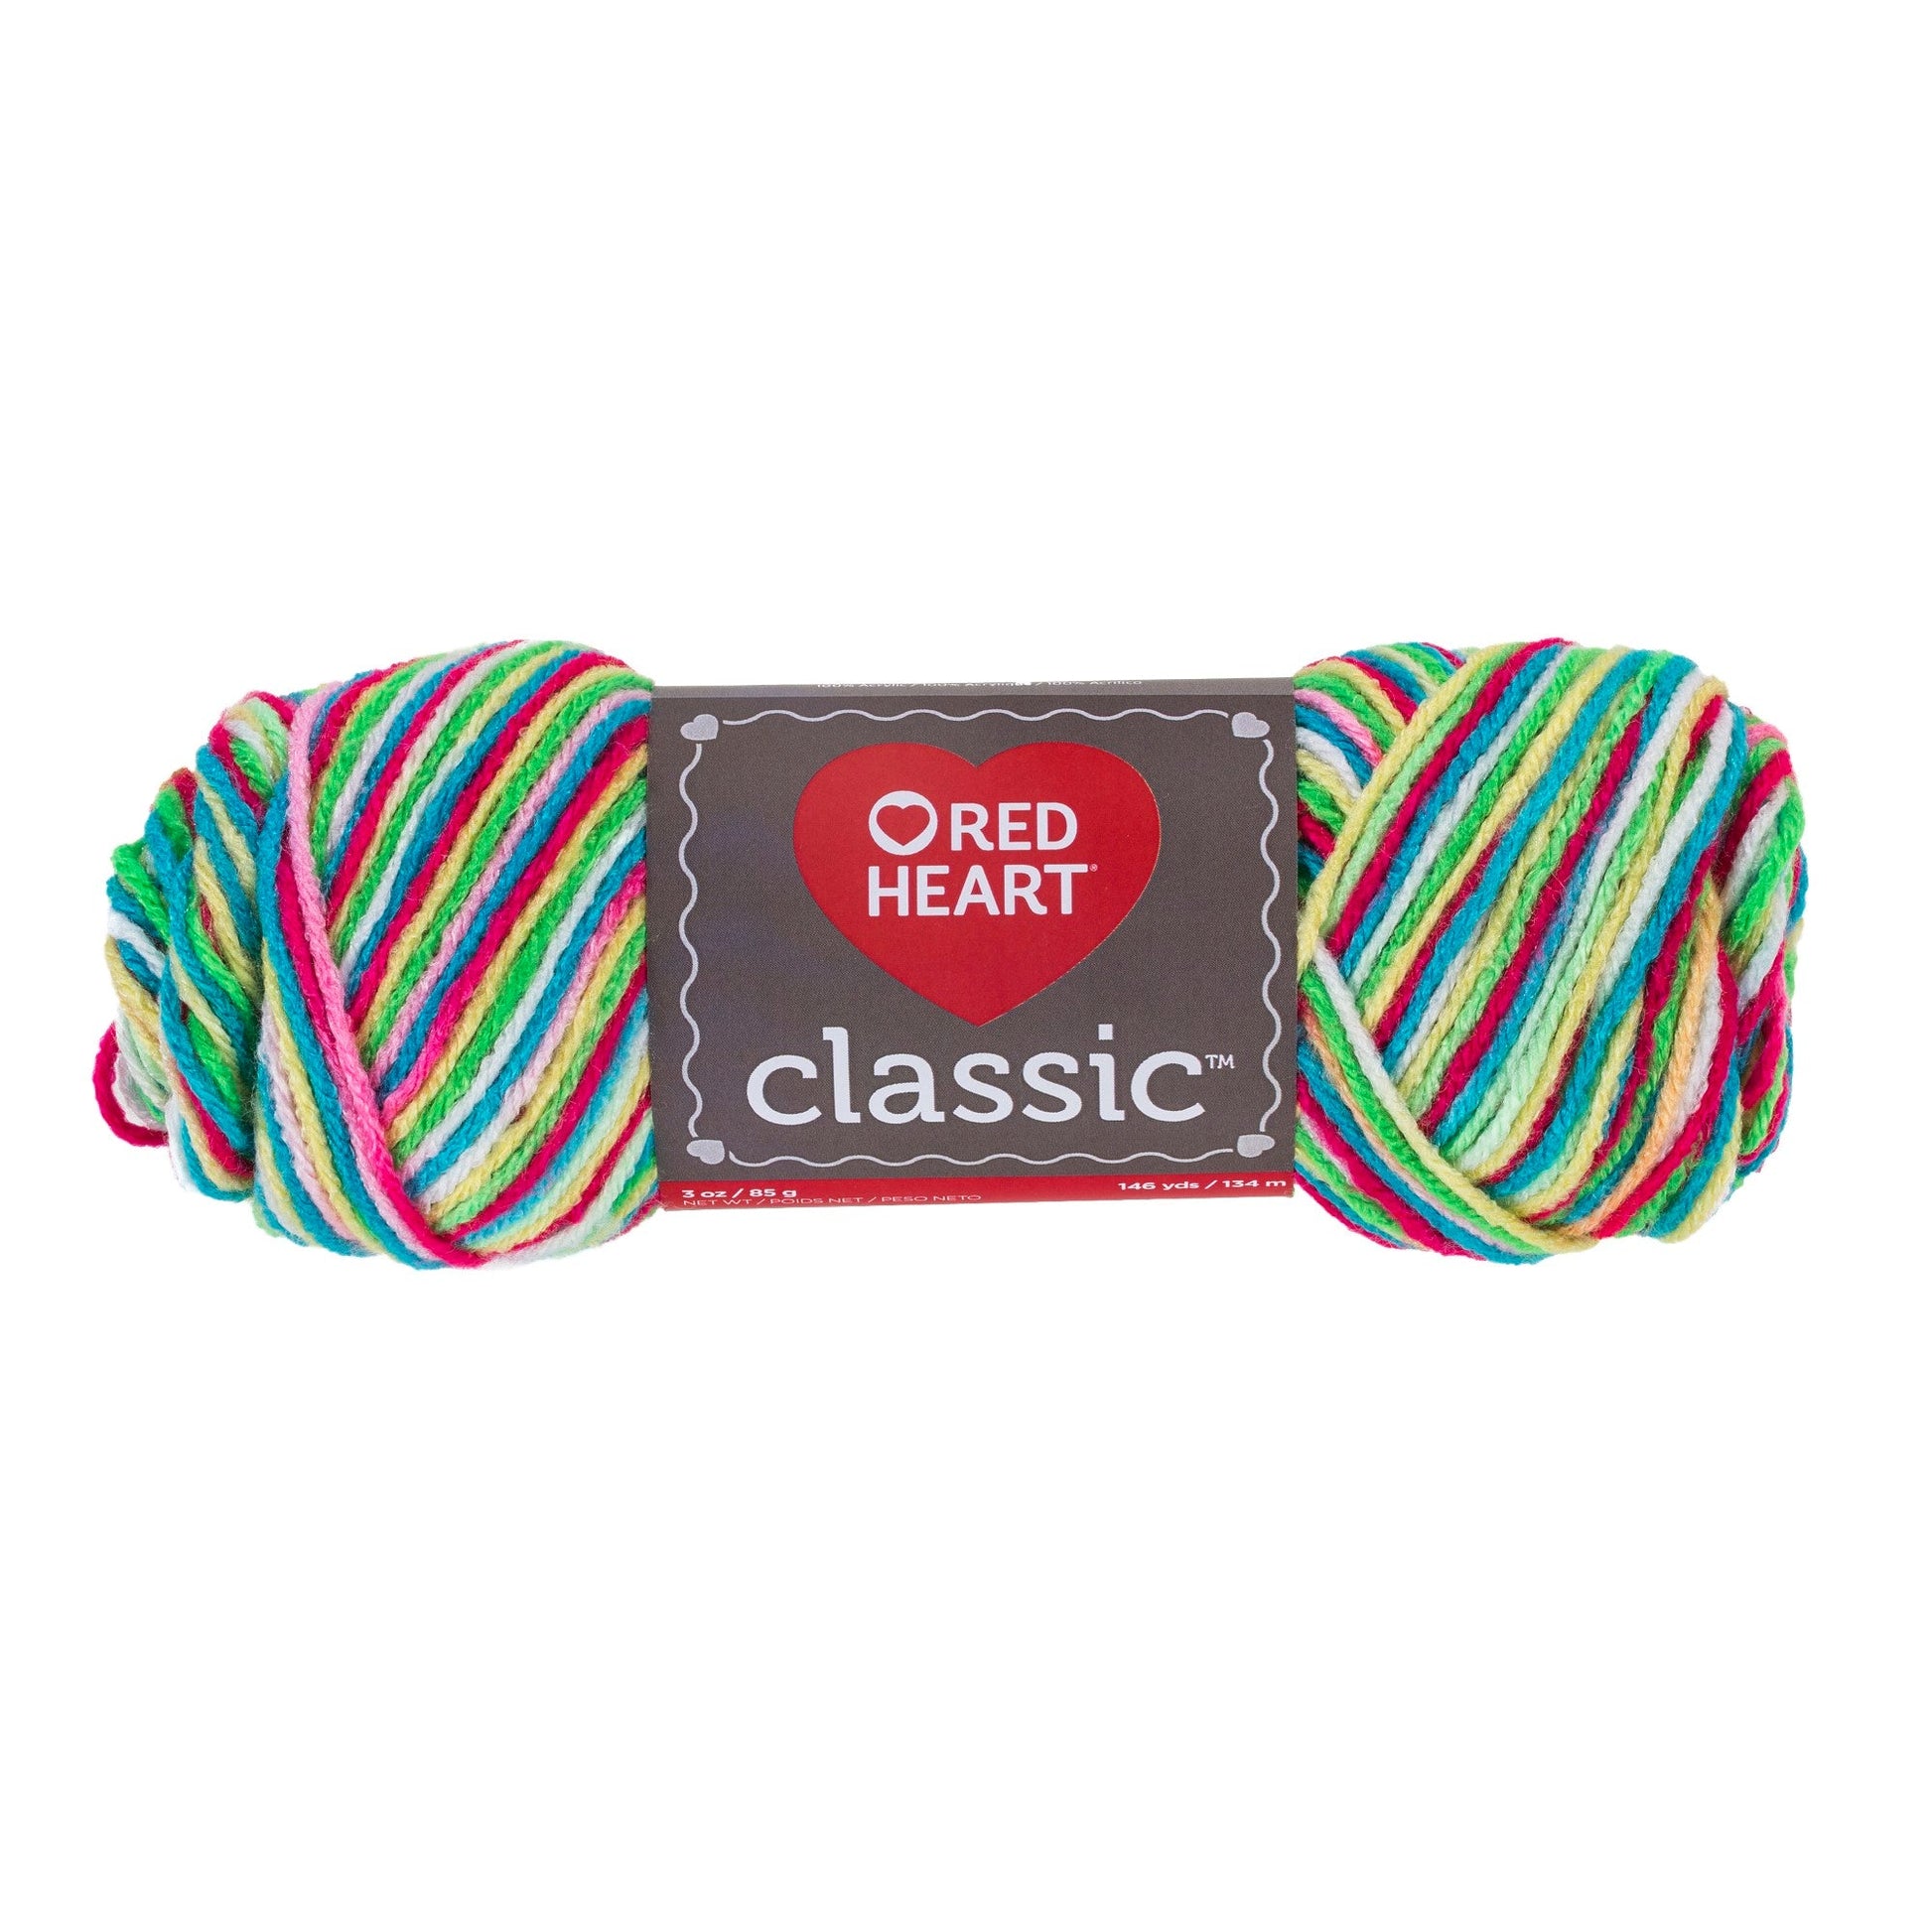 Red Heart Classic Yarn - Clearance shades Rainbow Brights